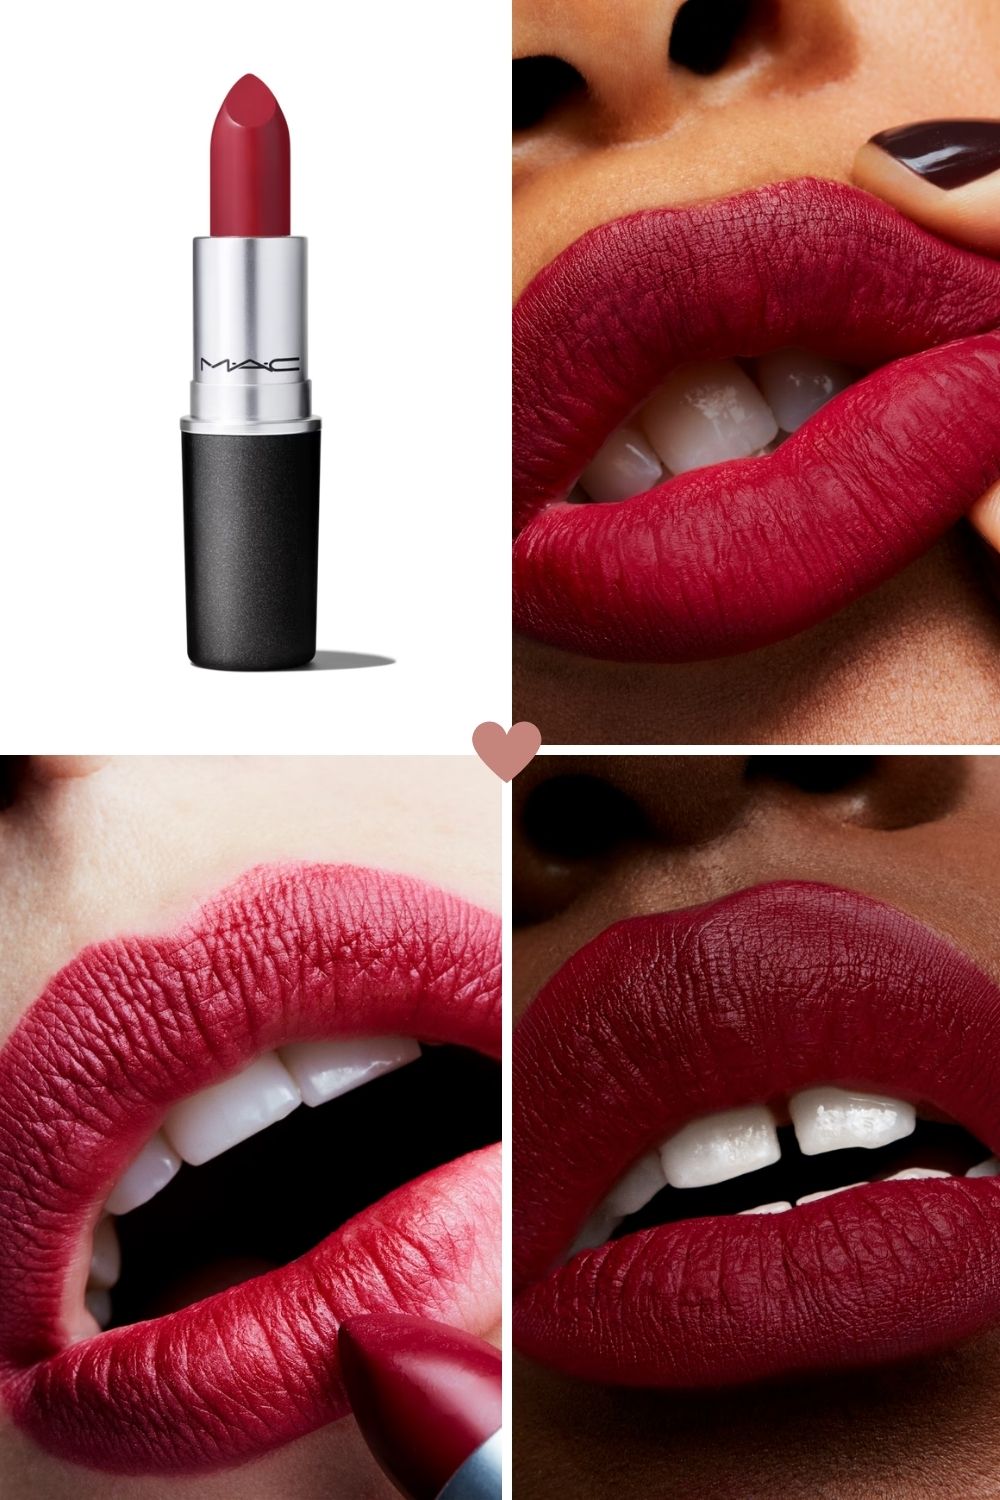 mac dangerous lipstick swatch